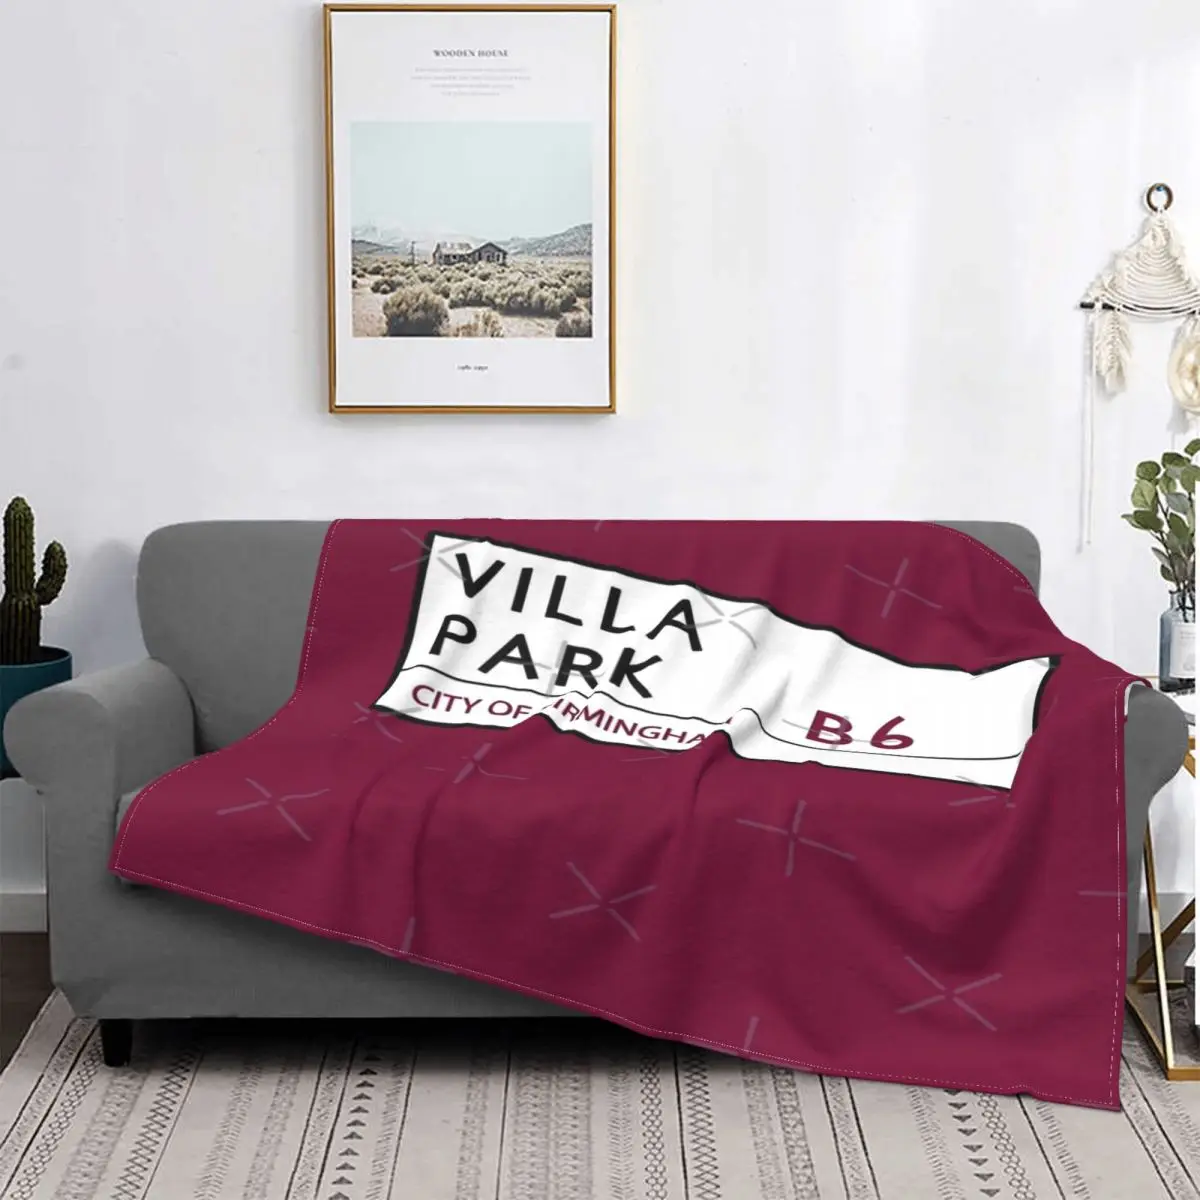 

Villa Park Road Sign Blanket Bedspread Bed Plaid Cover Sofa Blanket Plaid Blankets Islam Prayer Rug